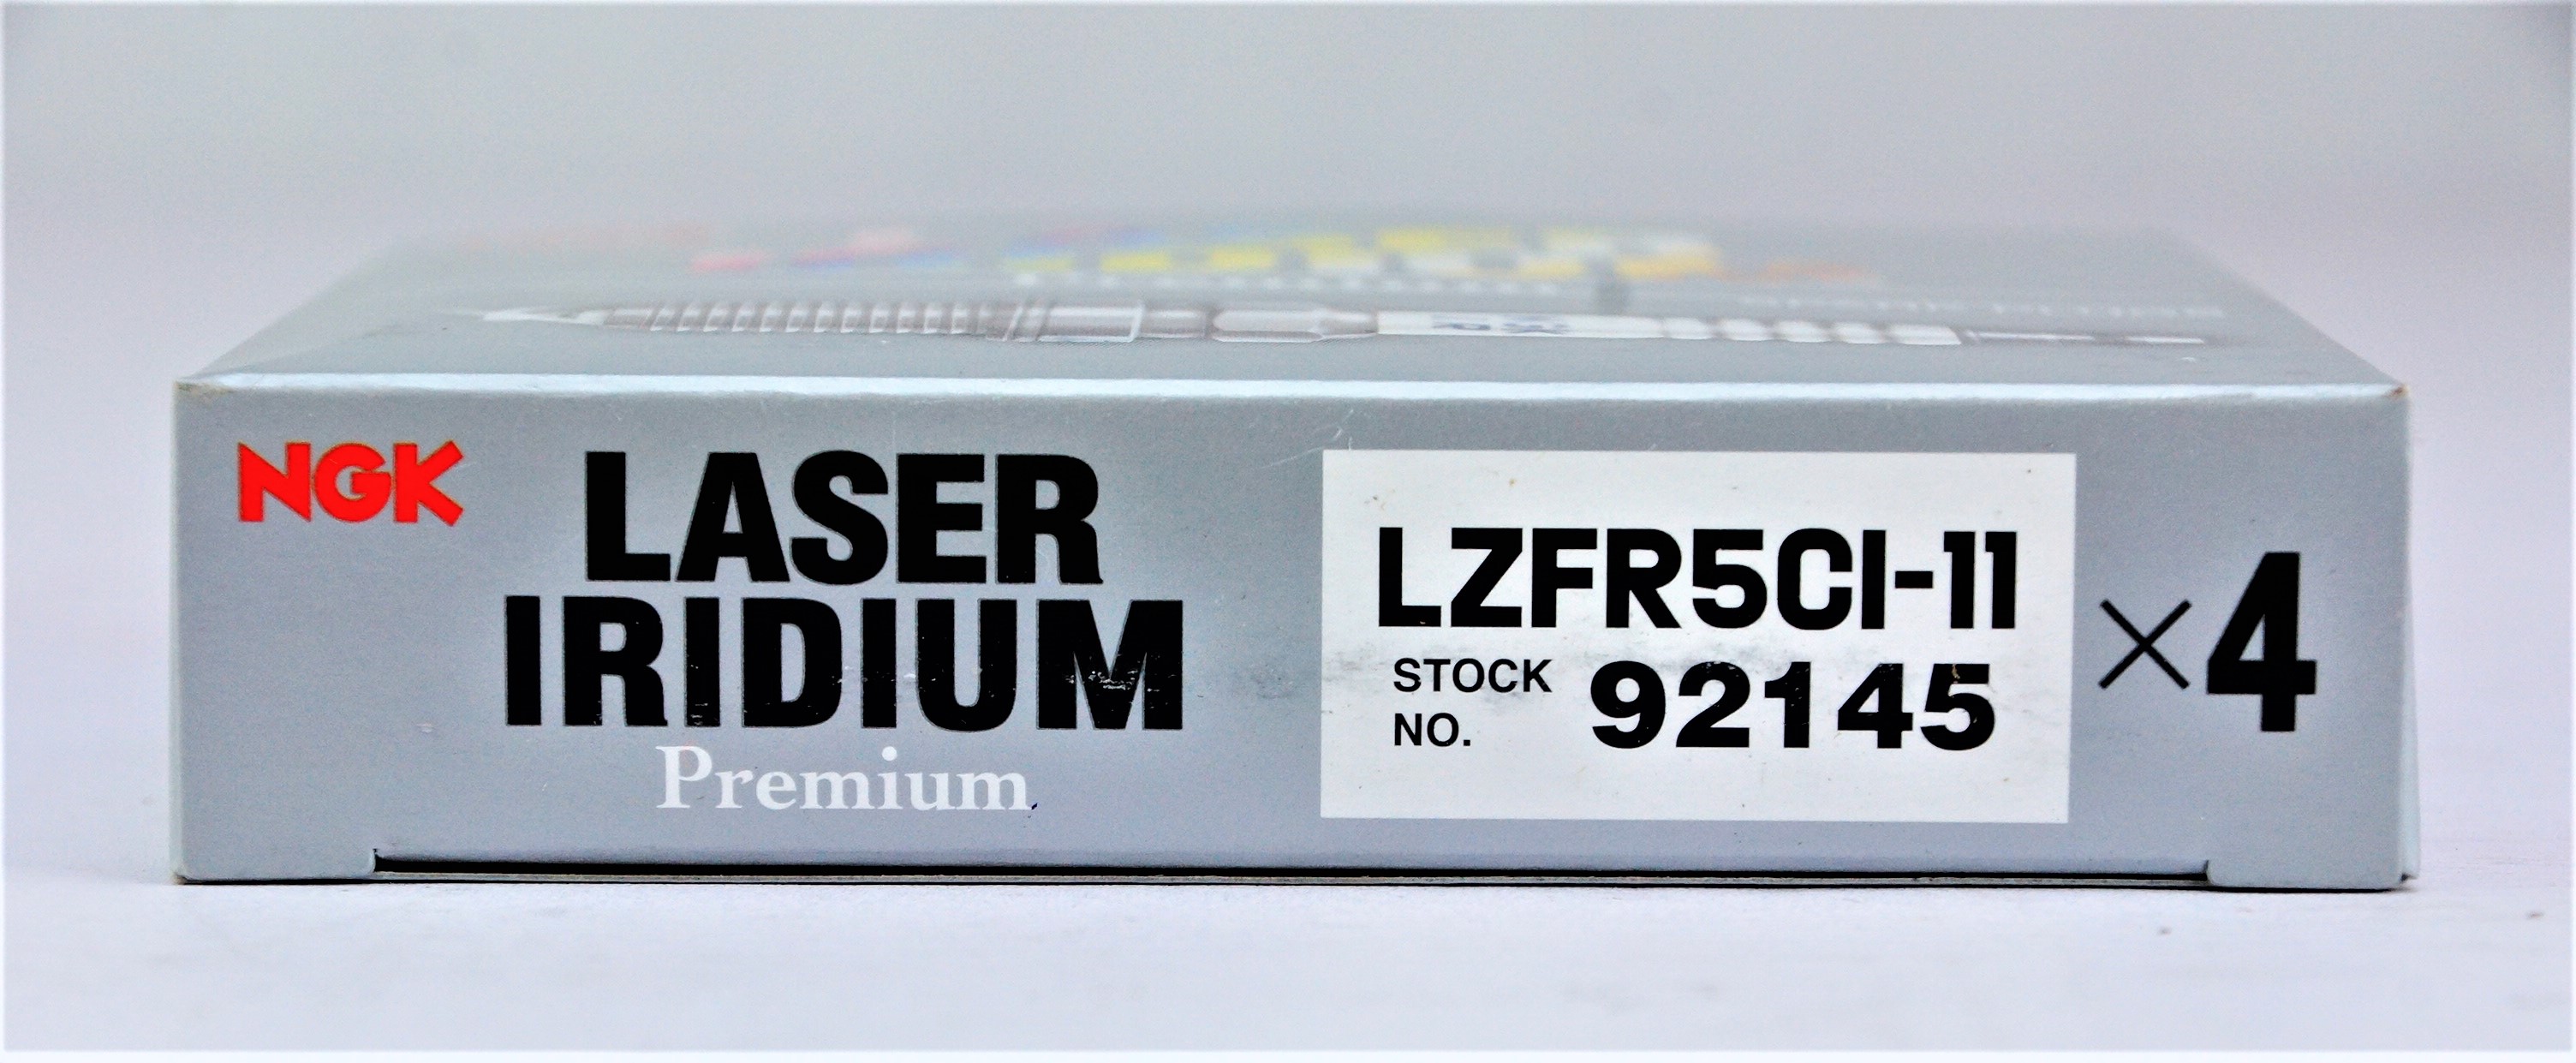 Pack of 8 - New Genuine NGK 92145 Laser Iridium Spark Plug Fast Free Shipping - image 9